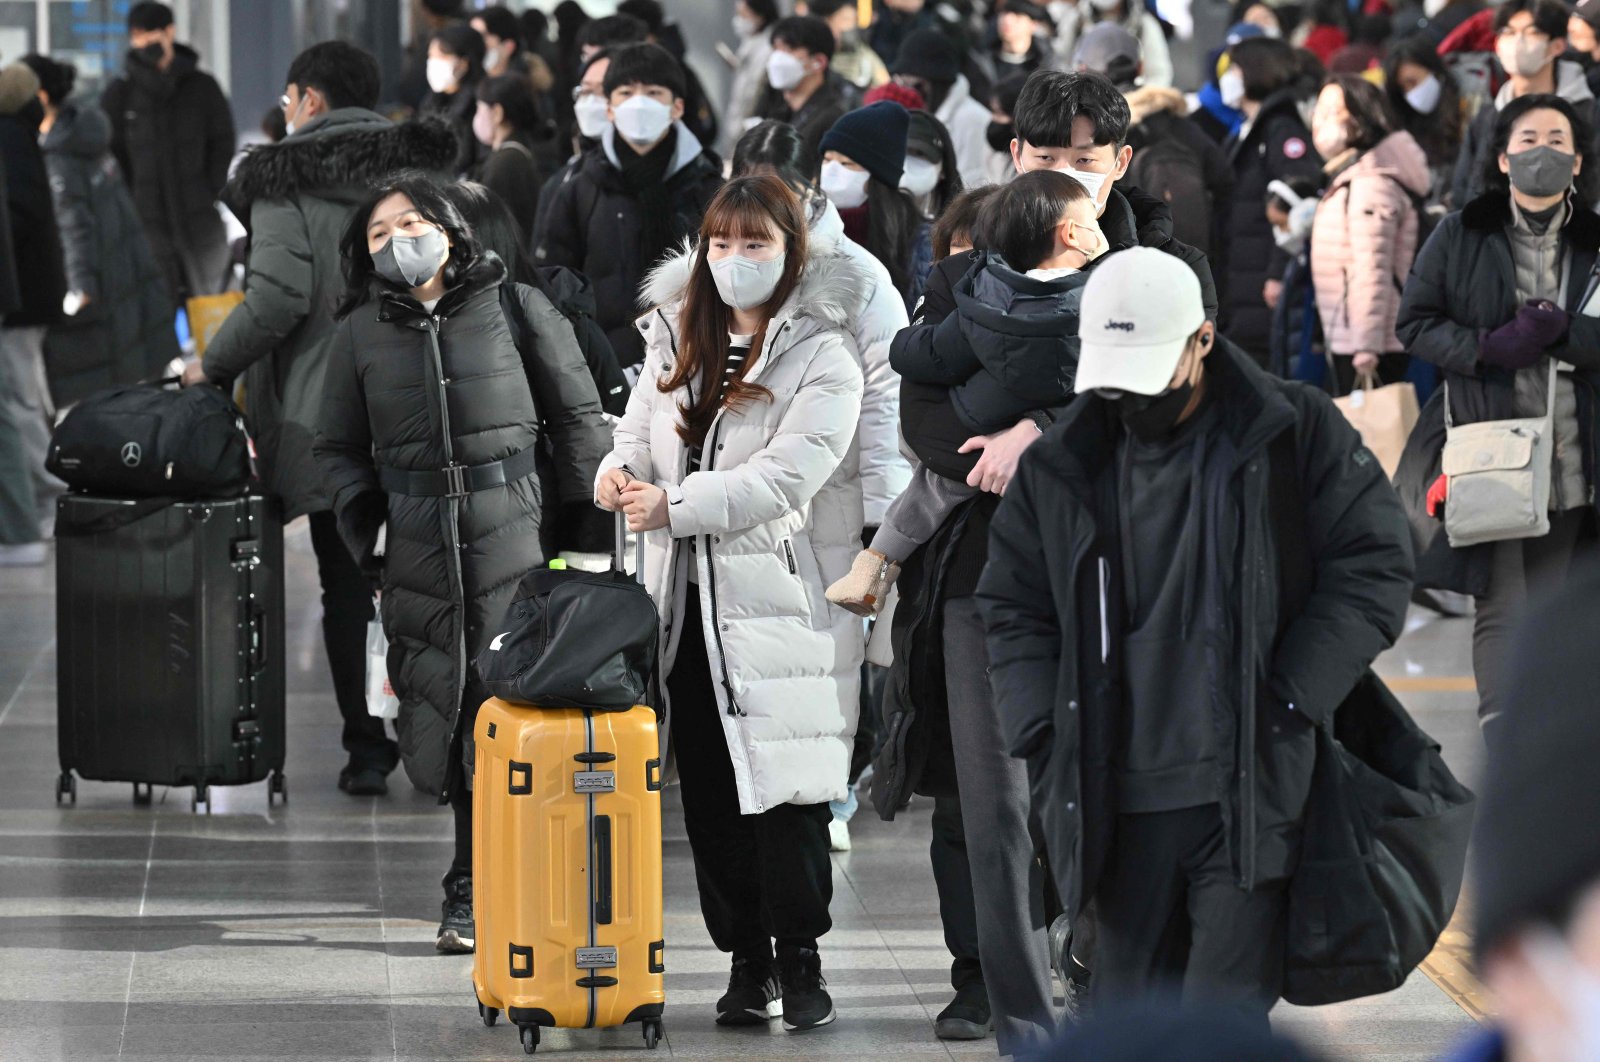 Passengers walk through a Seoul railway station ahead of the Lunar New Year holidays, Seoul, South Korea, Jan. 20, 2023. (AFP Photo)